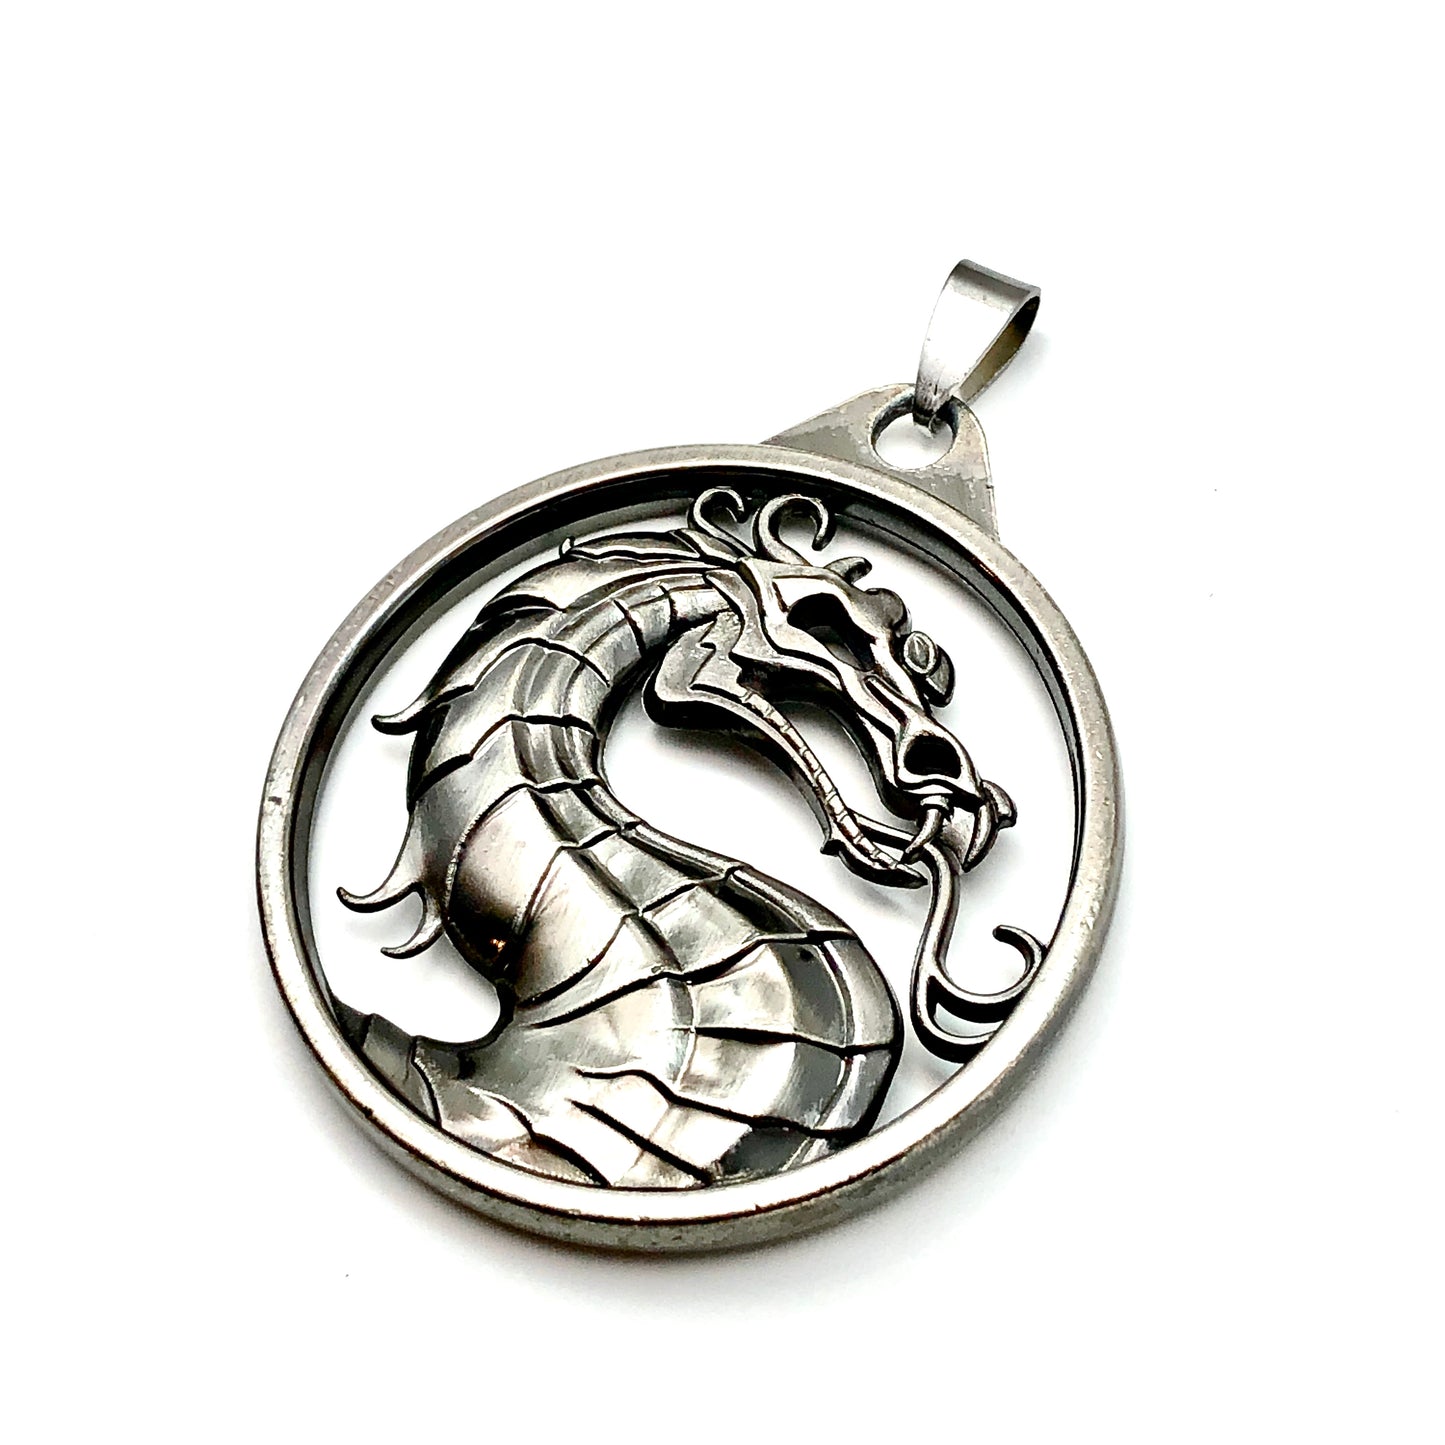 Pendant - Men's Edgy Style Oxidized Carbon Mythical Dragon Medallion Pendant | Estate Jewelry | Snake Pendant